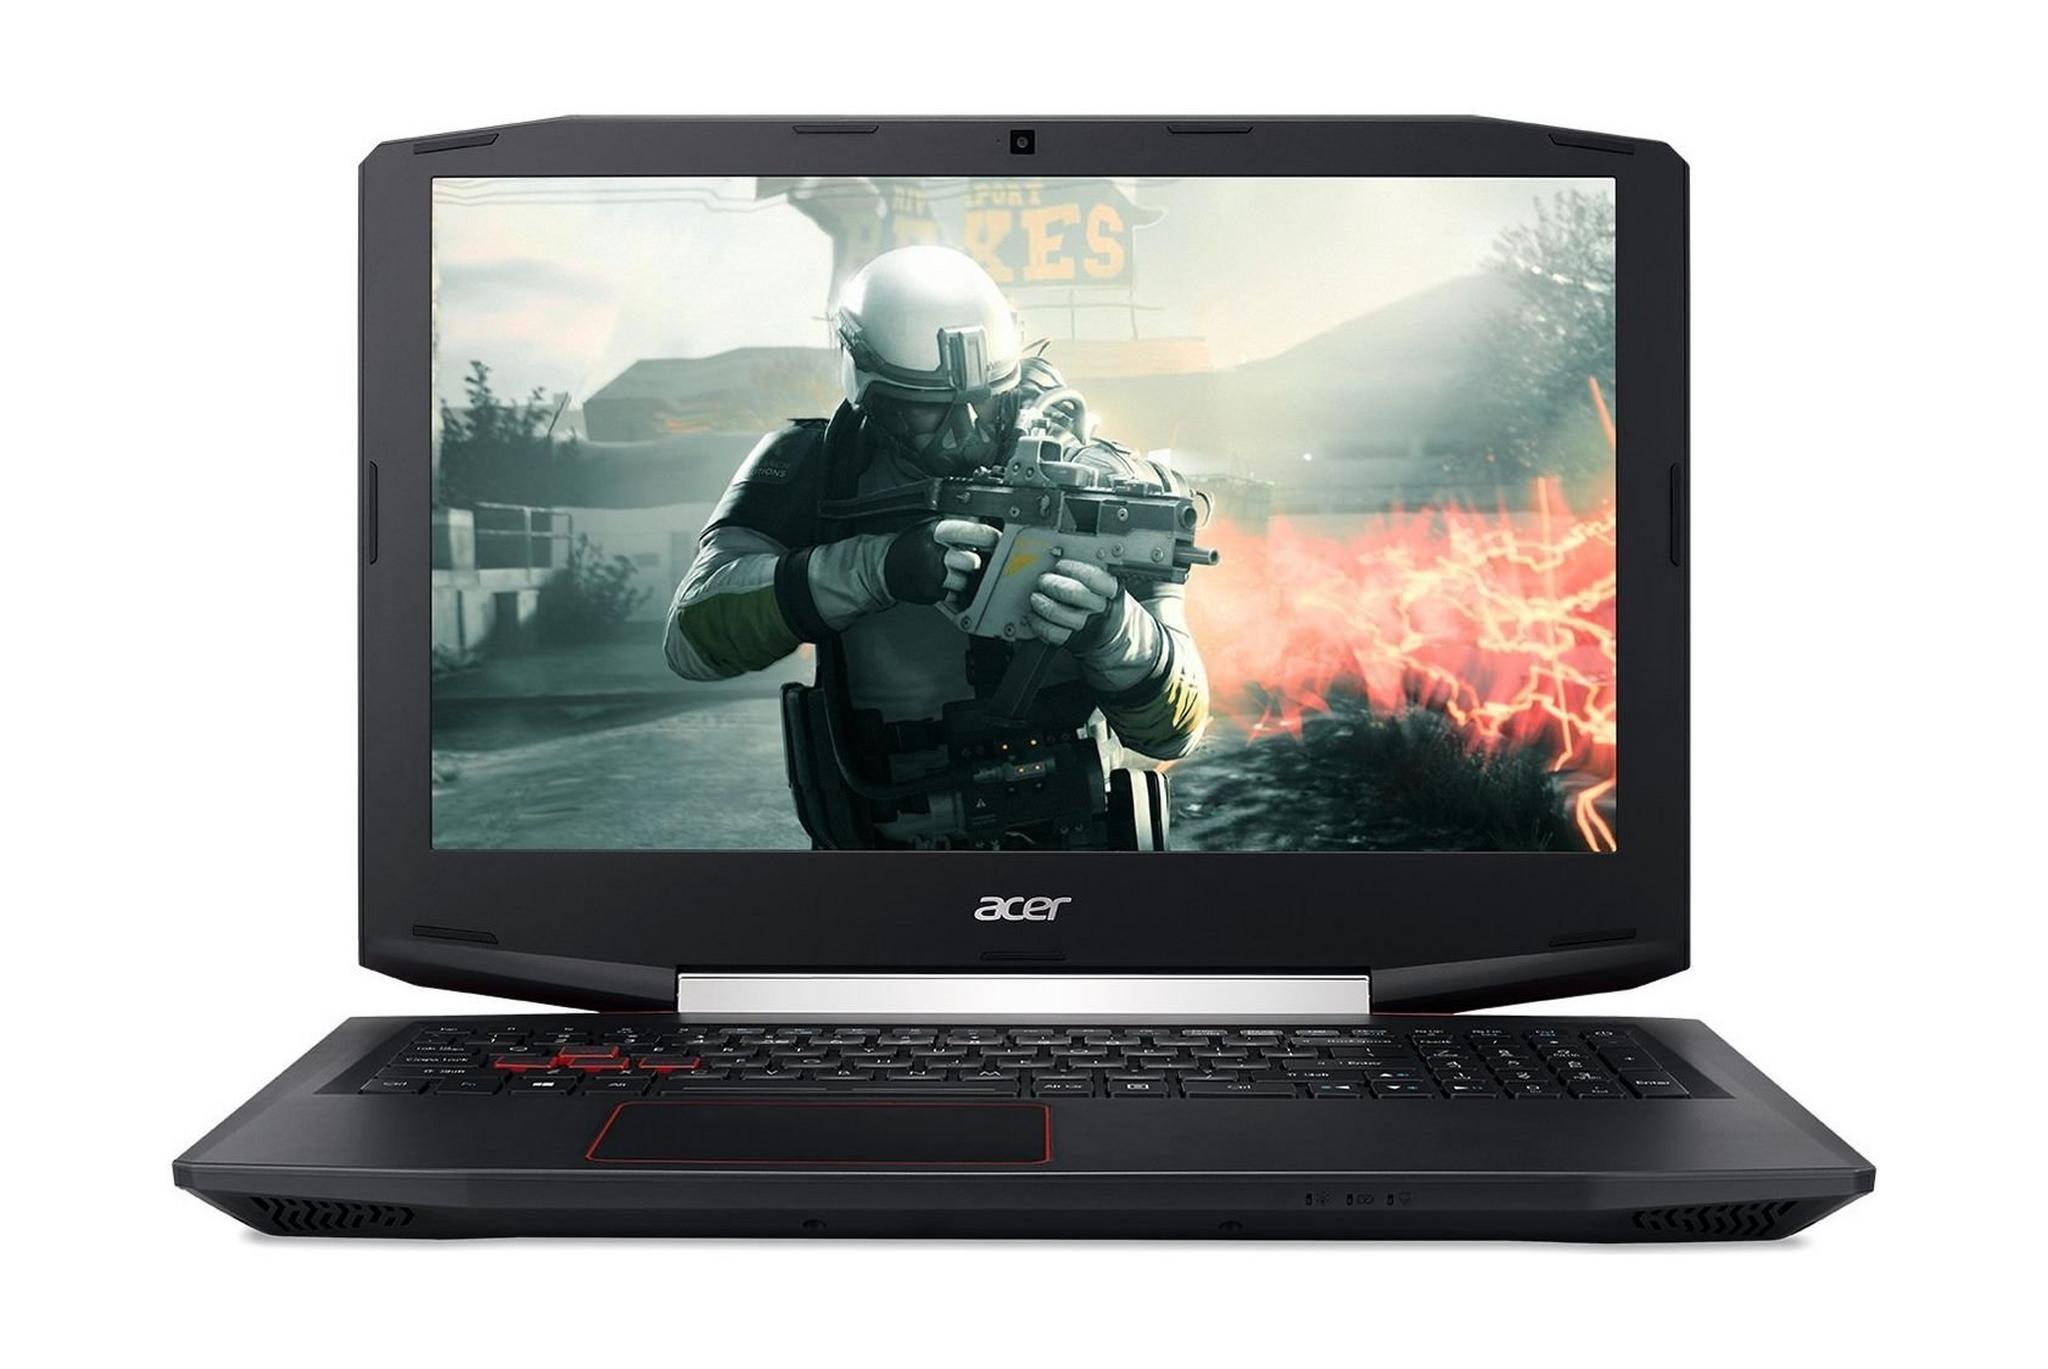 Acer VX5-591G GeForce GTX 1050 4GB Core i7 16GB RAM 1TB HDD + 256GB SSD 15.6-inch Gaming Laptop – Black